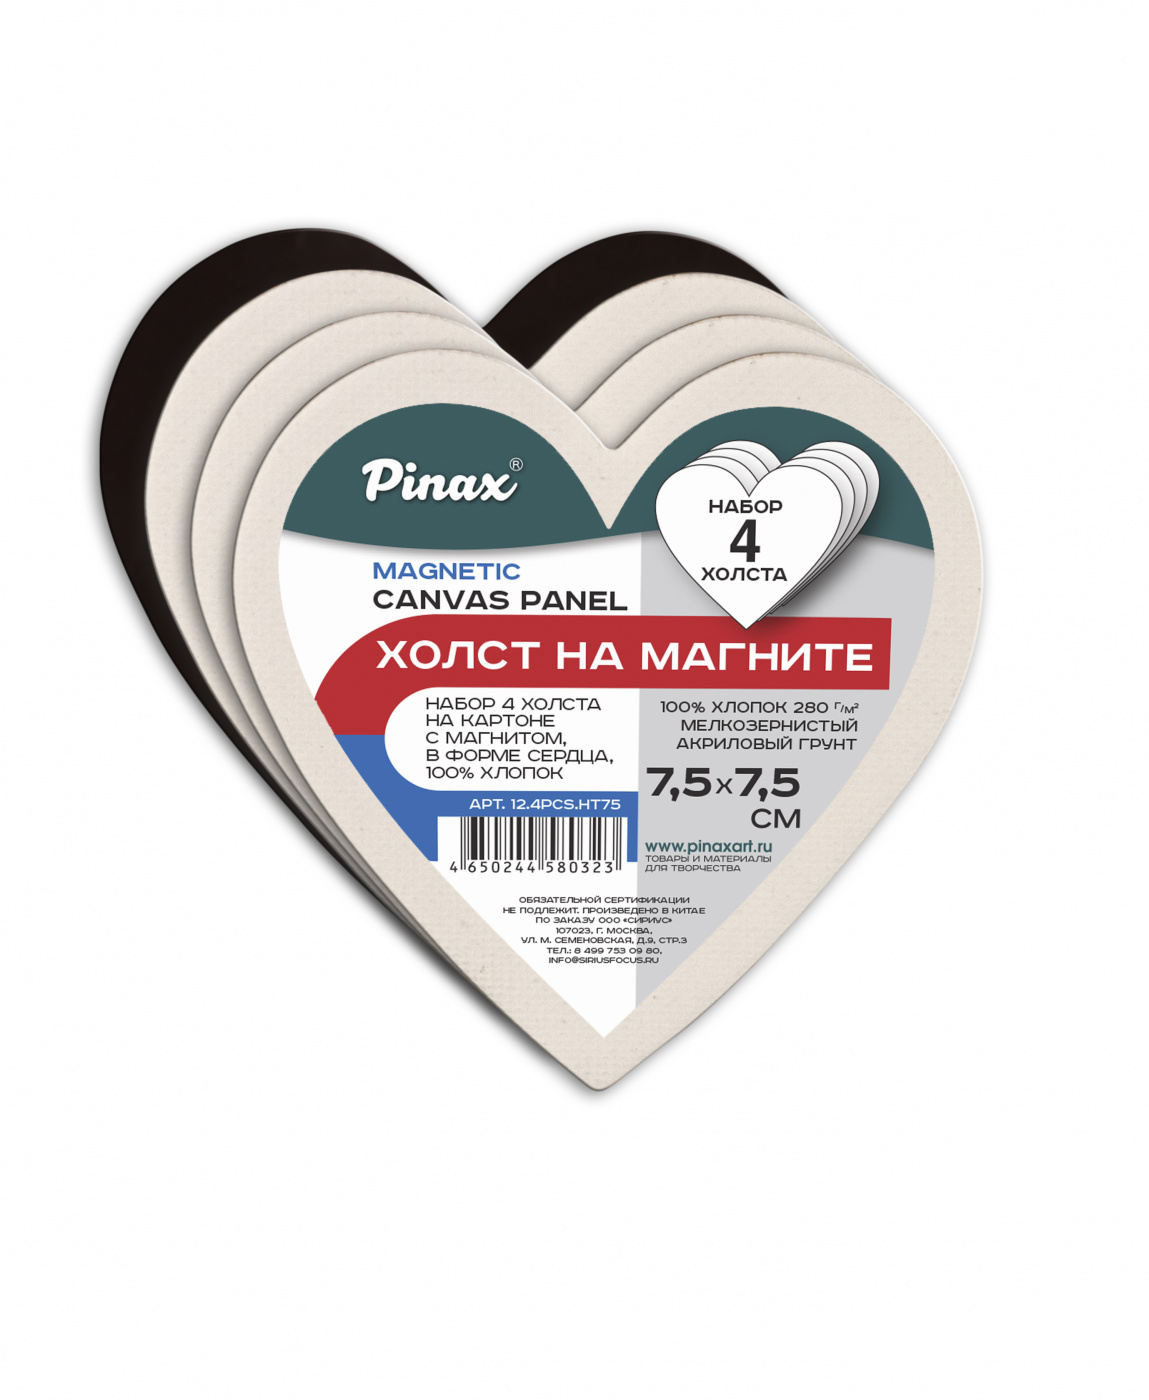 Набор холстов на картоне с магнитом Pinax 4 шт, хлопок 100%, в форме сердца 7,5 см набор холстов на картоне с магнитом pinax 4 шт хлопок 100% квадратные 7 5х7 5 см